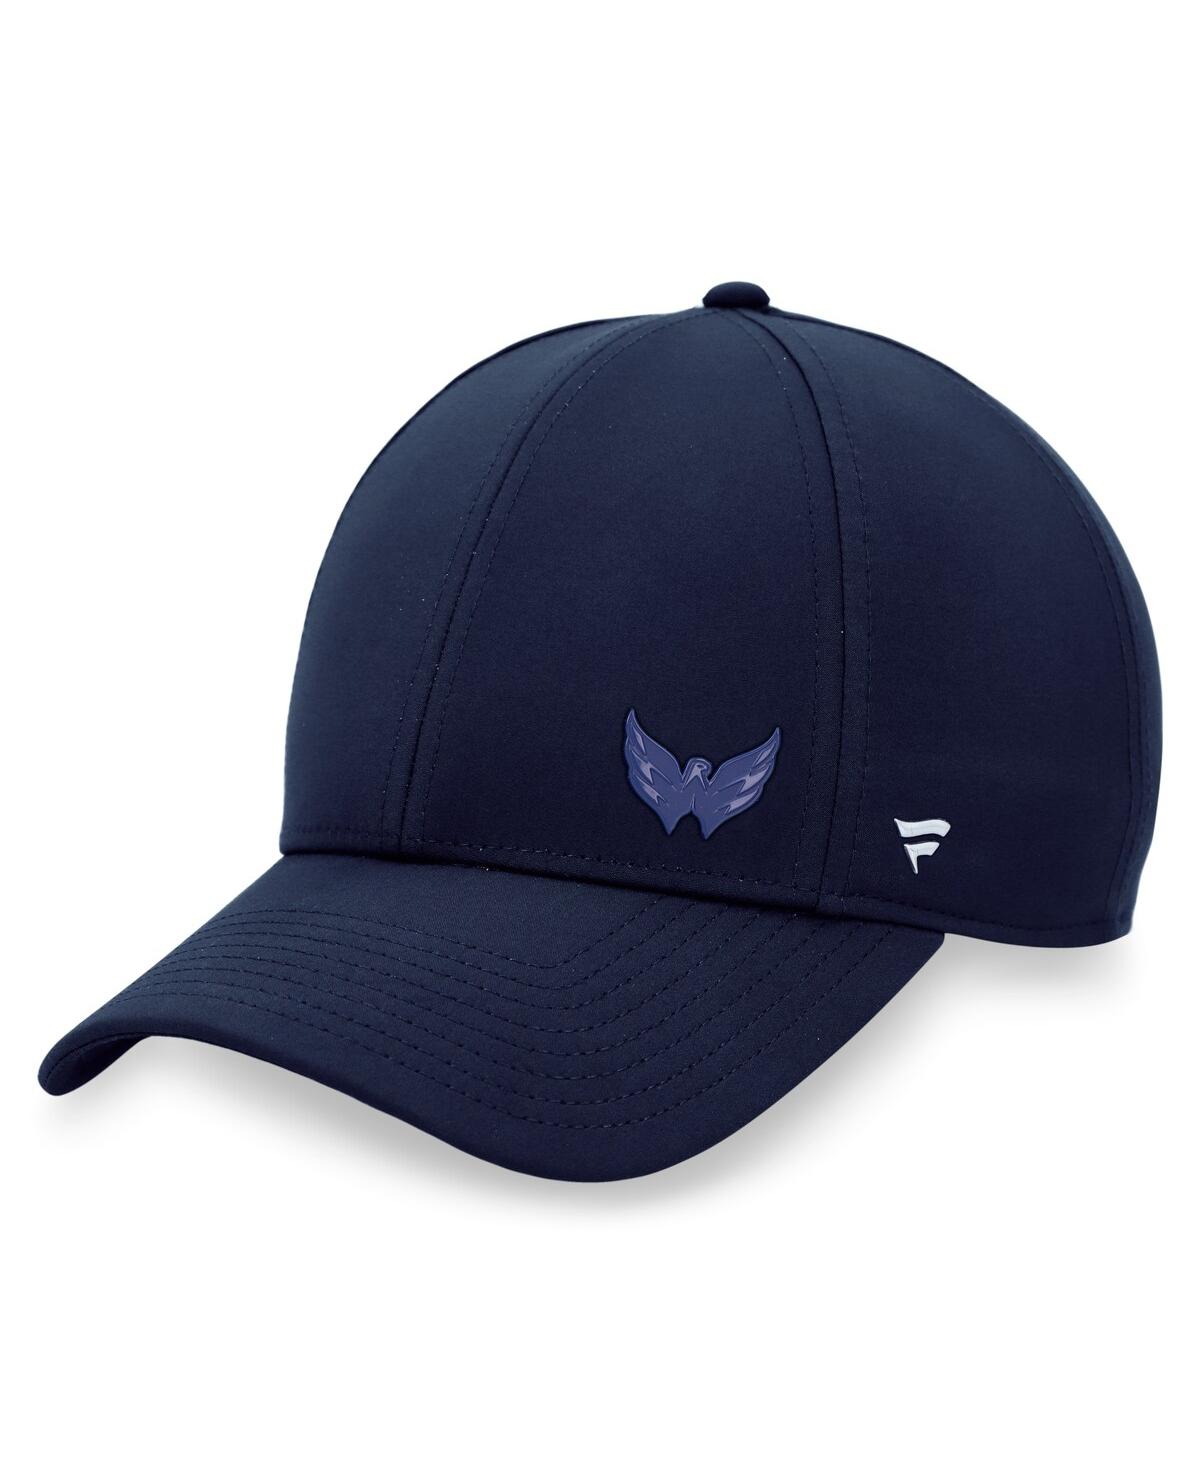 Shop Fanatics Women's  Navy Washington Capitals Authentic Pro Road Structured Adjustable Hat